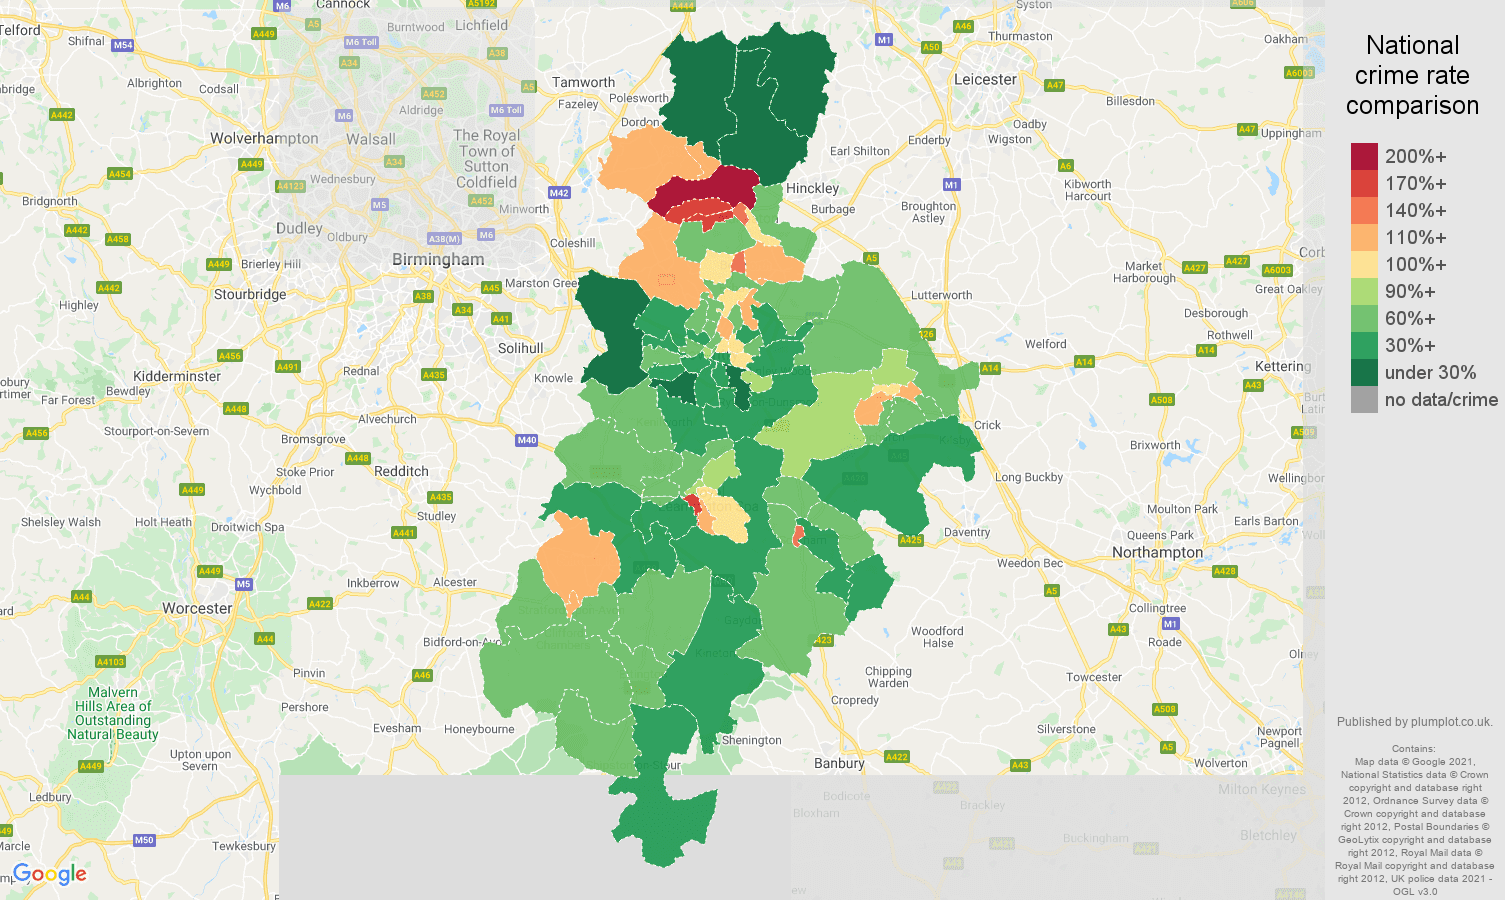 Coventry antisocial behaviour crime rate comparison map